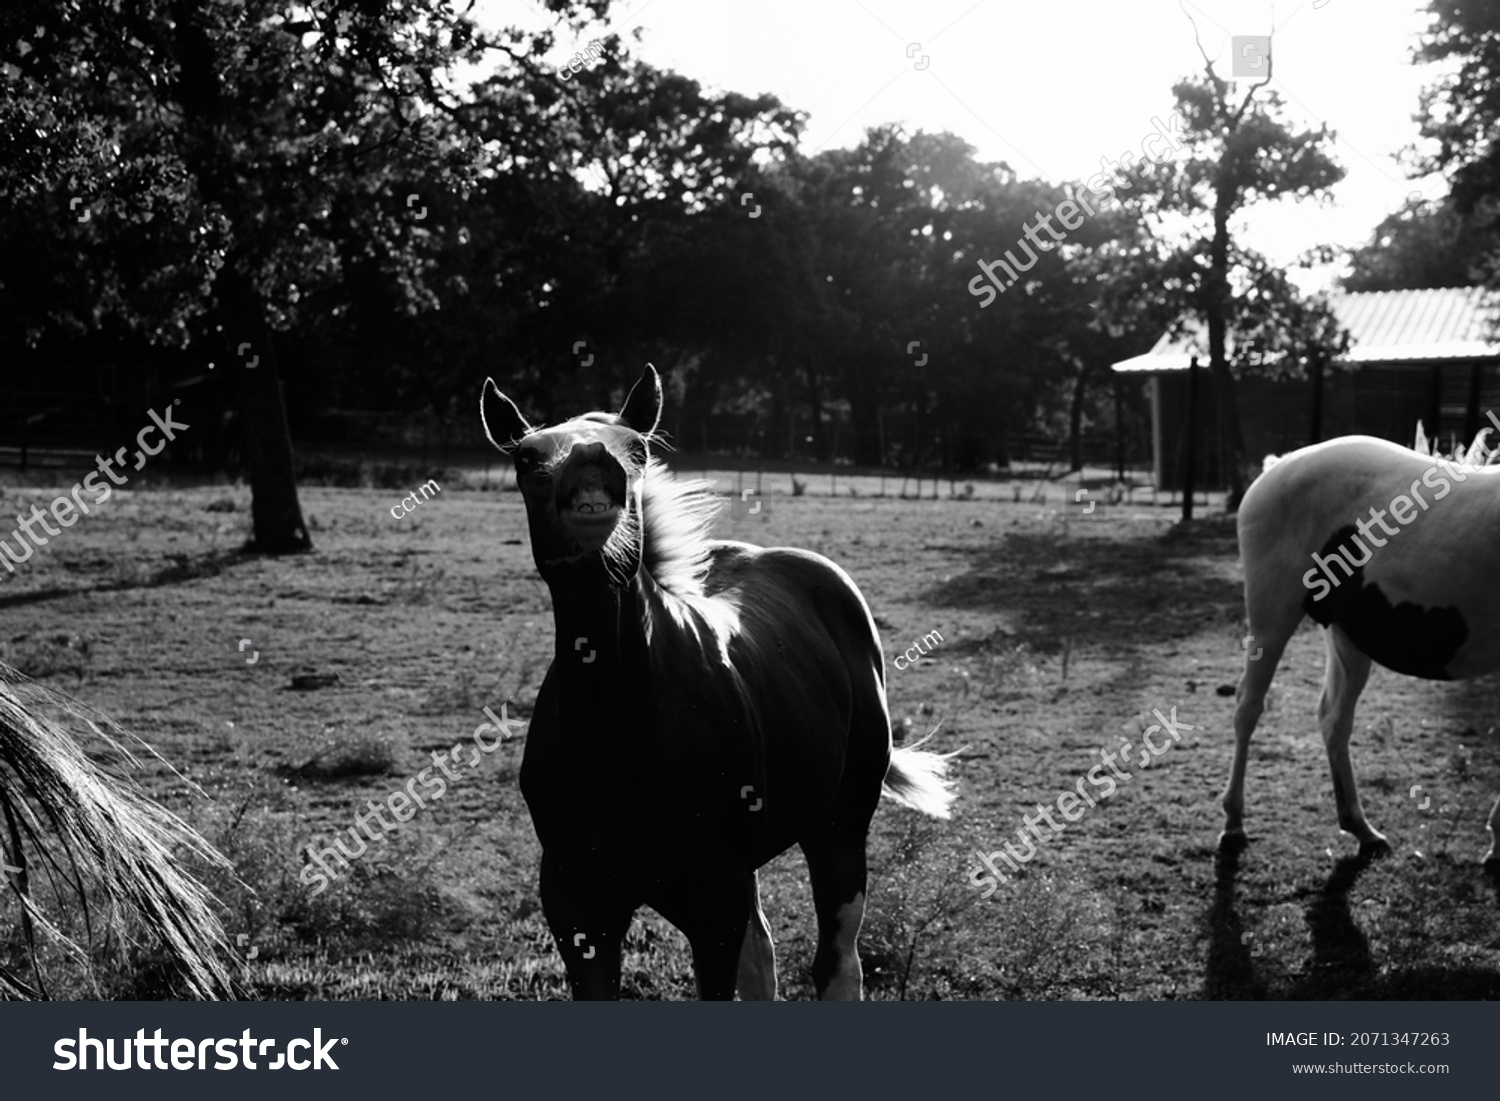 Colt horse making flehmen response face with horses in farm field. #2071347263